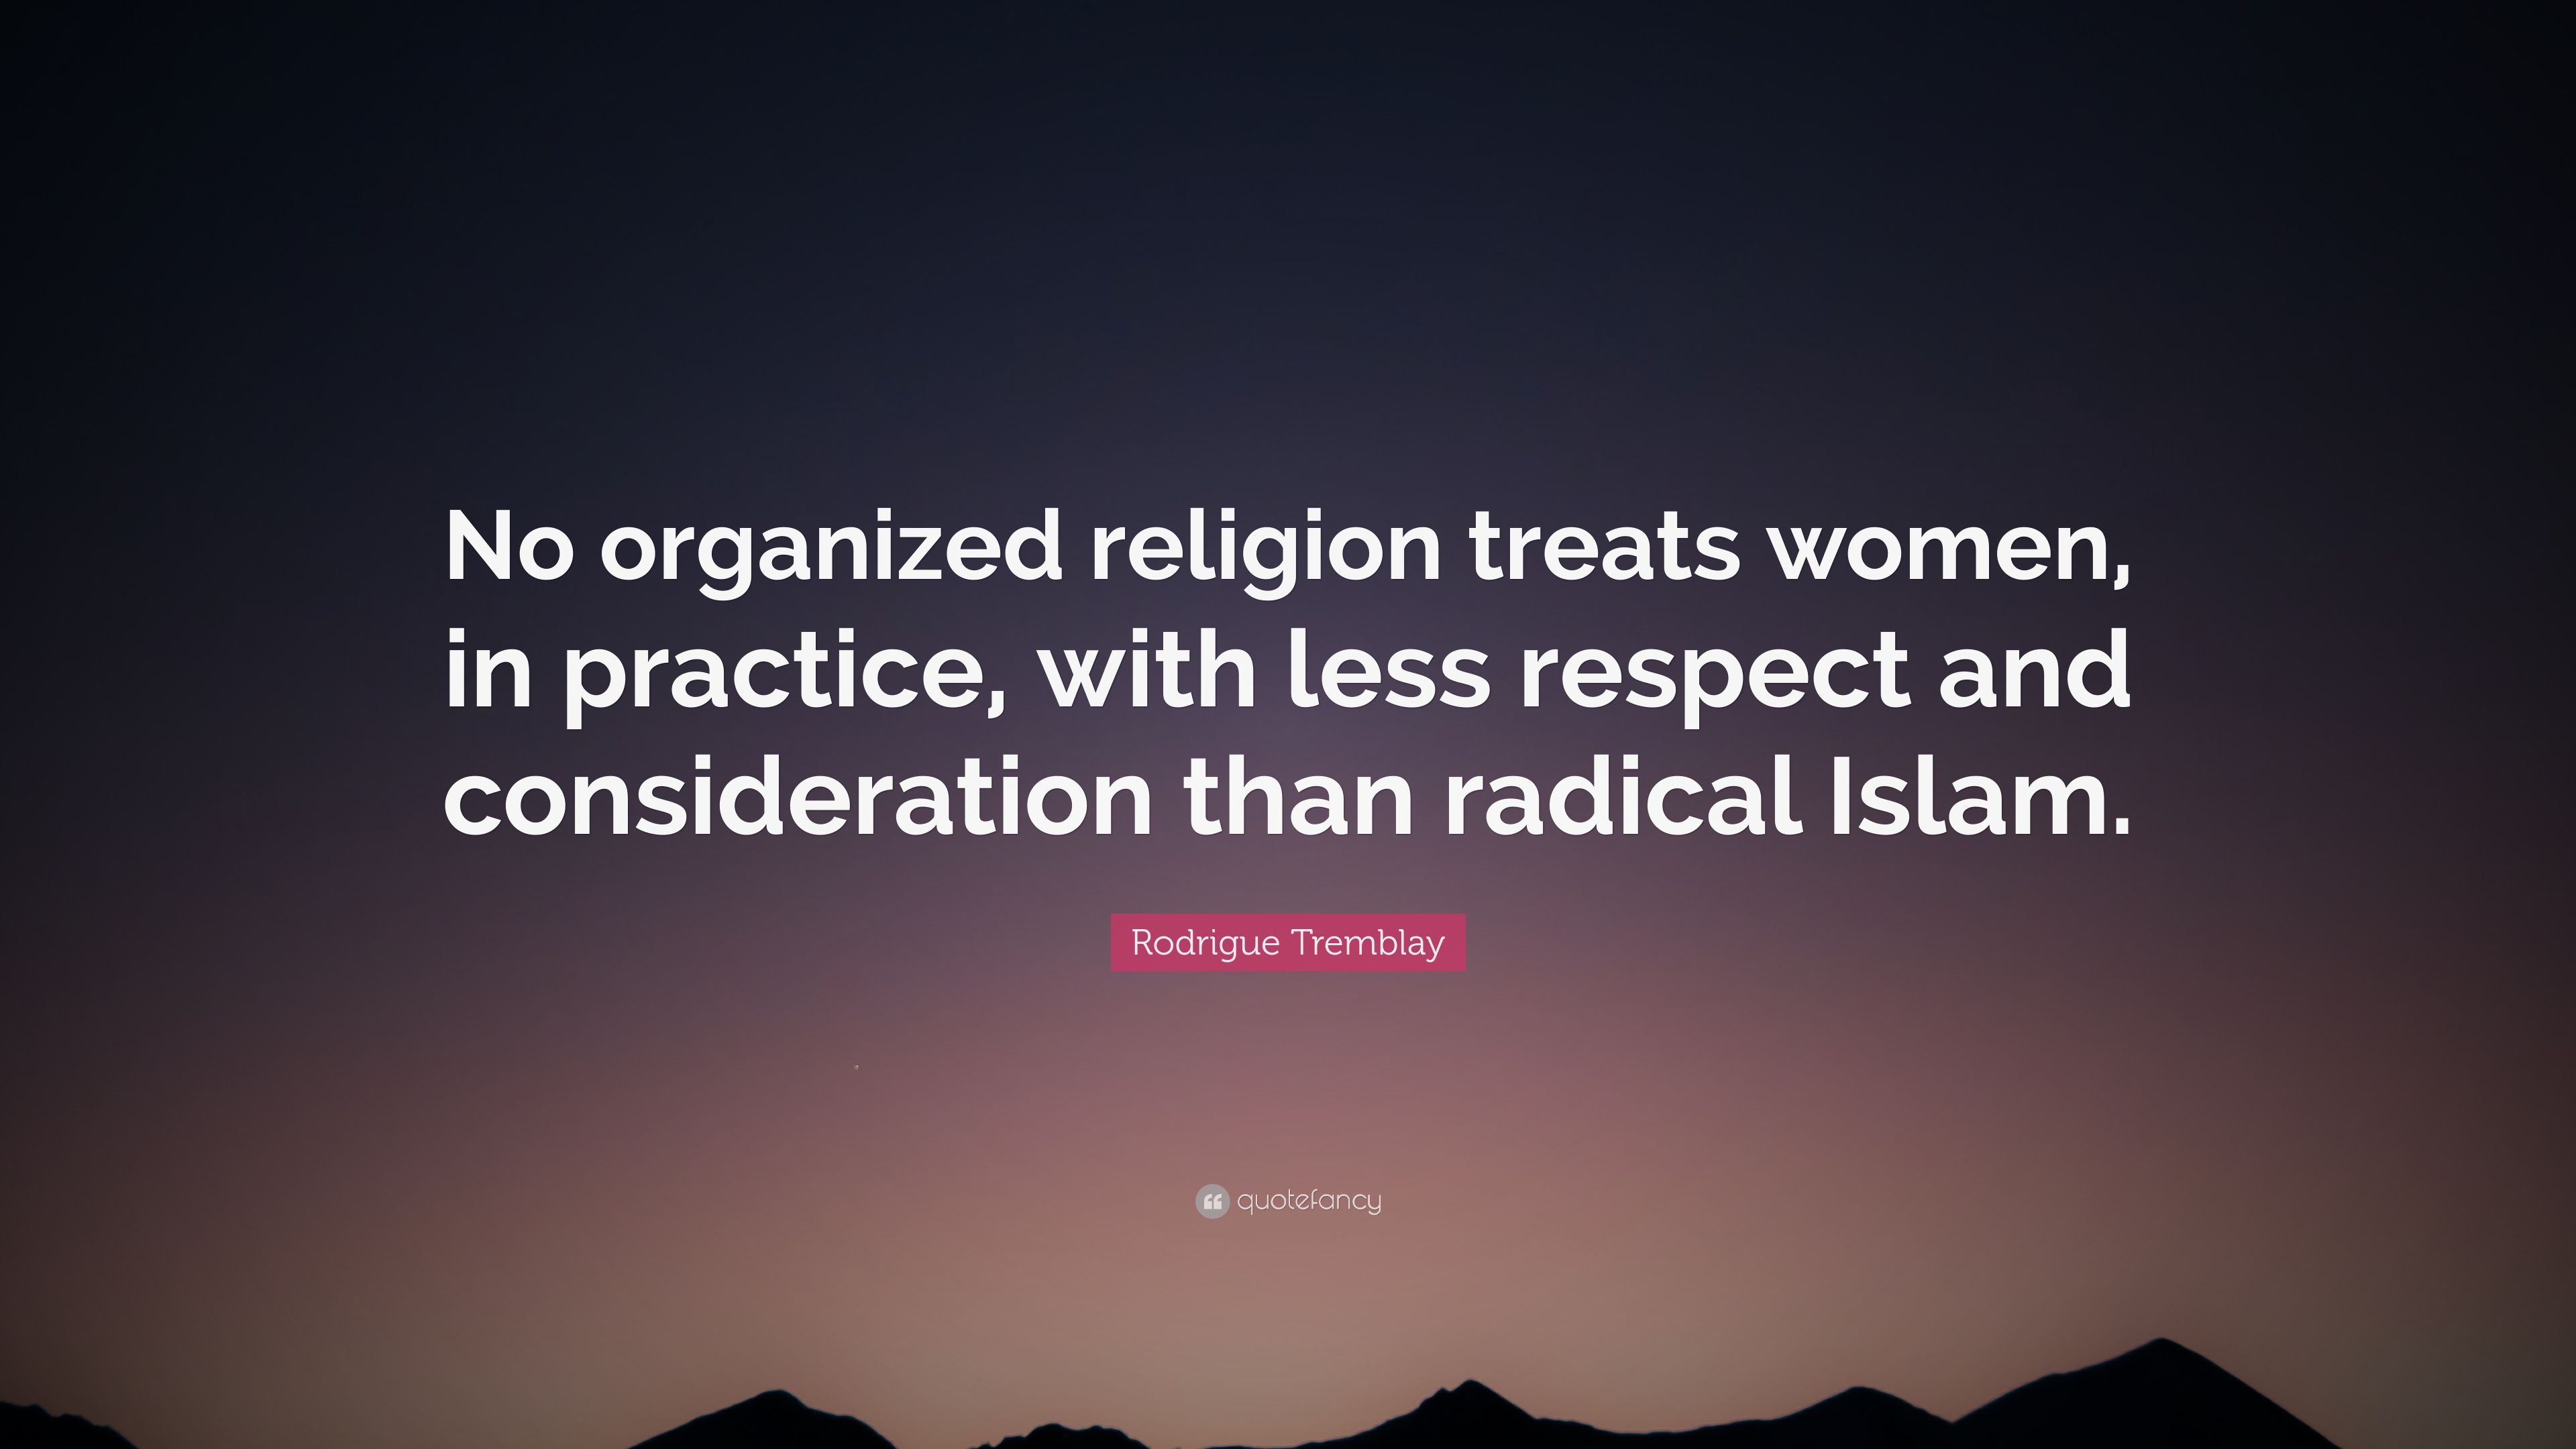 Rodrigue Tremblay Quote: “No organized religion treats women